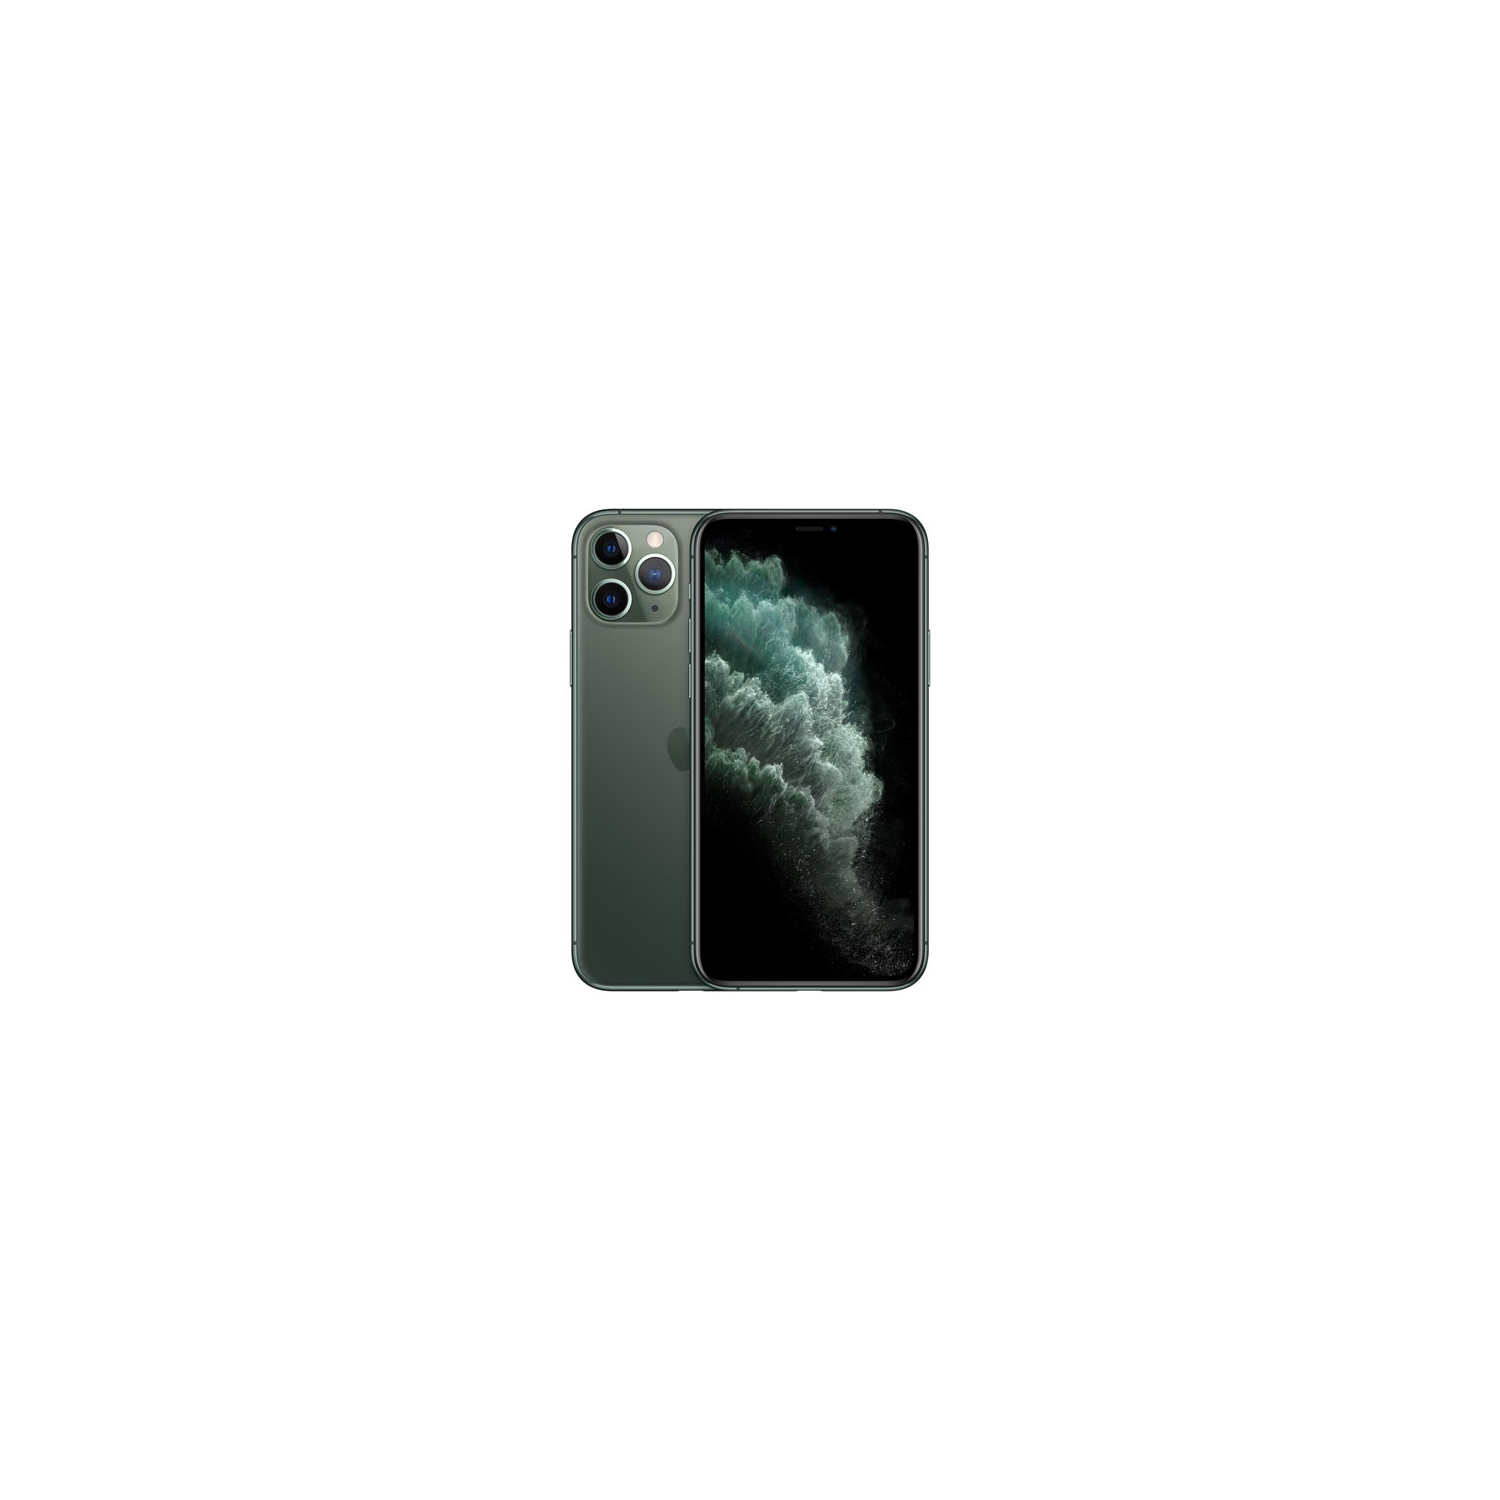 Refurbished (Fair) - Apple iPhone 11 Pro 512GB - Space Grey - Unlocked